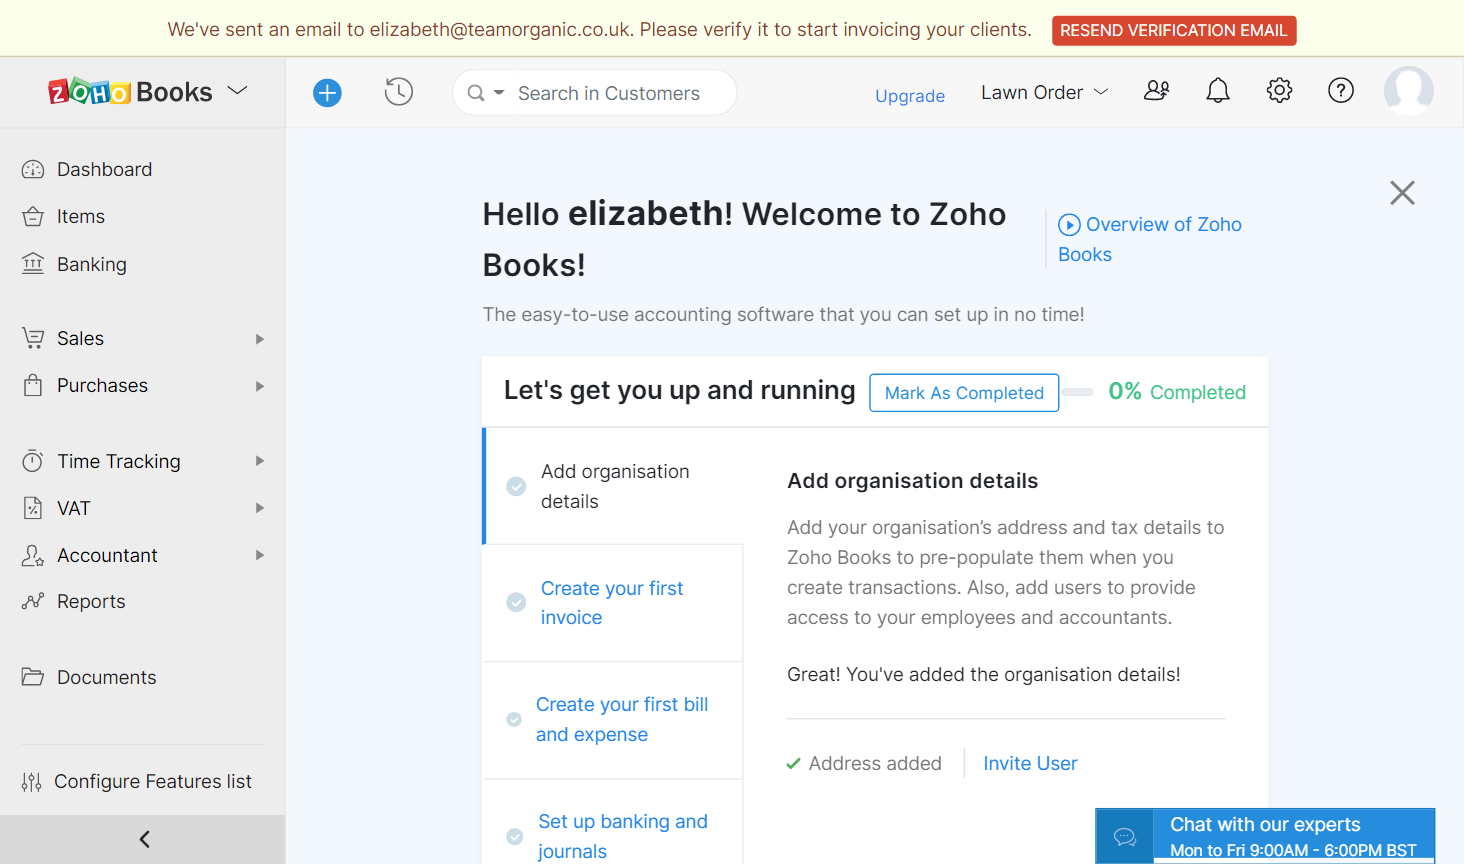 Zoho Books - Welcome